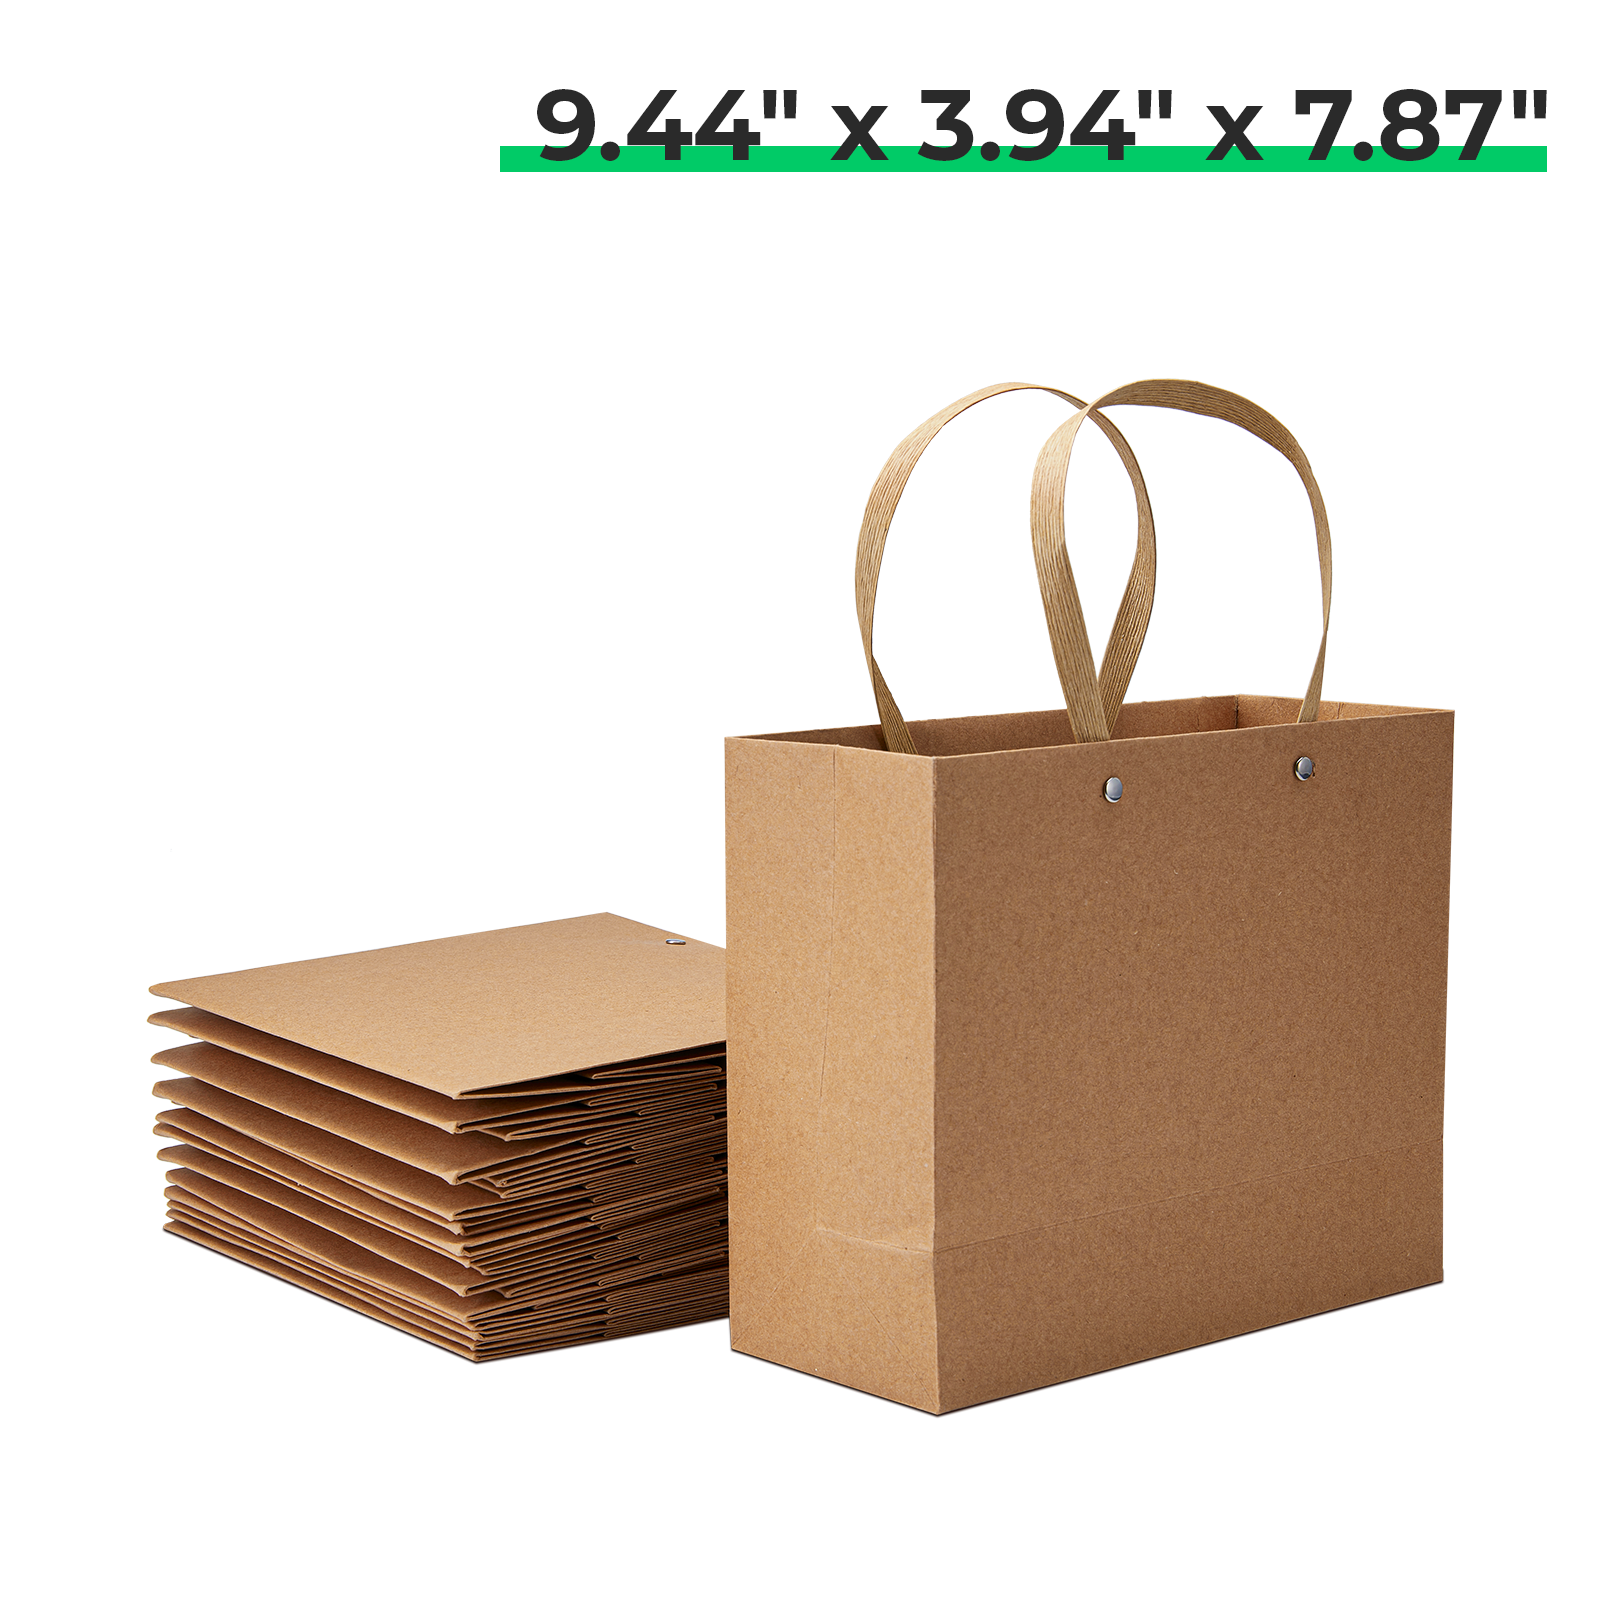 Kraft Paper Bag with Handle